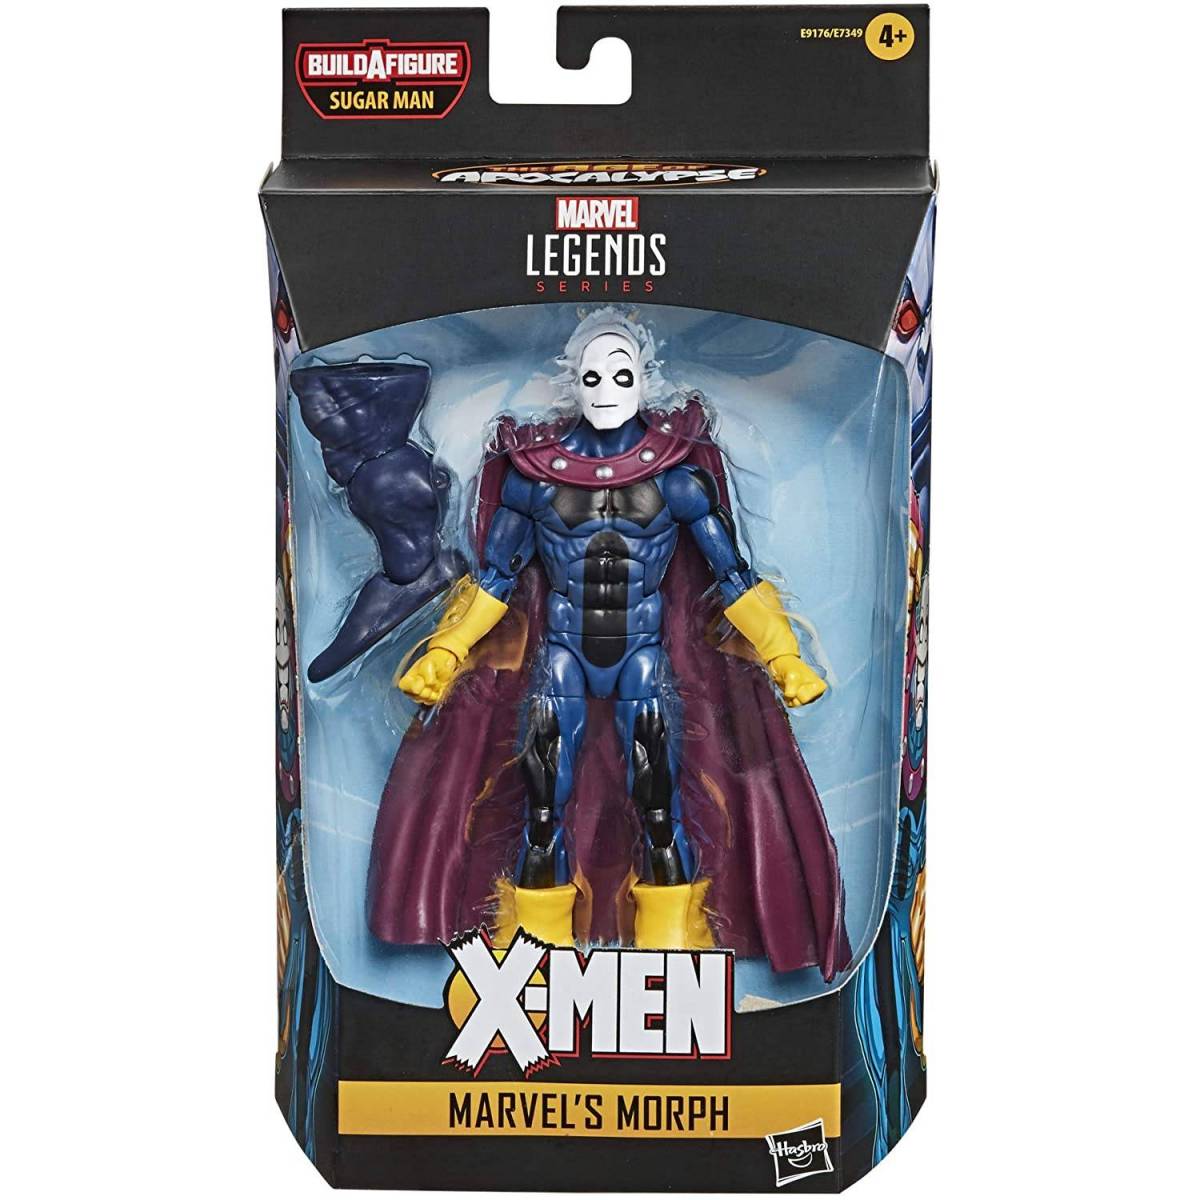 https://www.maxxidiscount.com/23523-large_default/marvel-s-morph-6-marvel-legends-x-men-collector-s-edition-figure.jpg